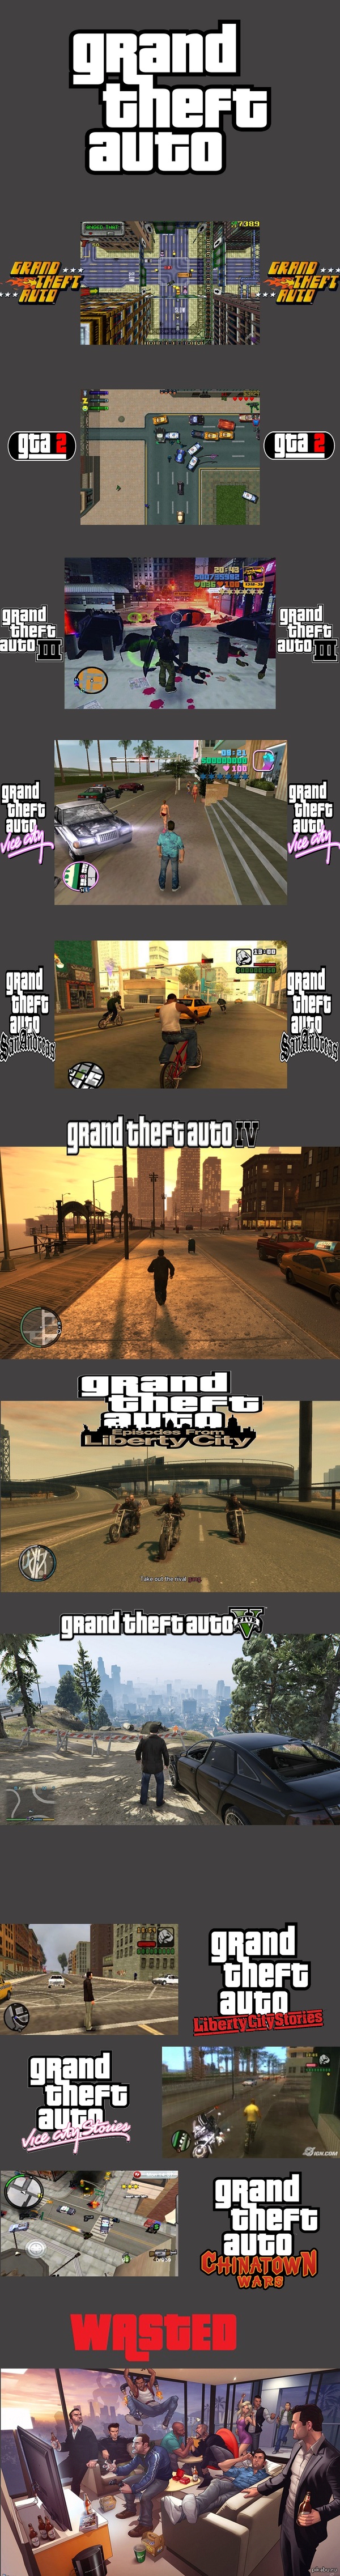    (Grand Theft Auto) : http://www.youtube.com/watch?v=DWWF7NPaoA4